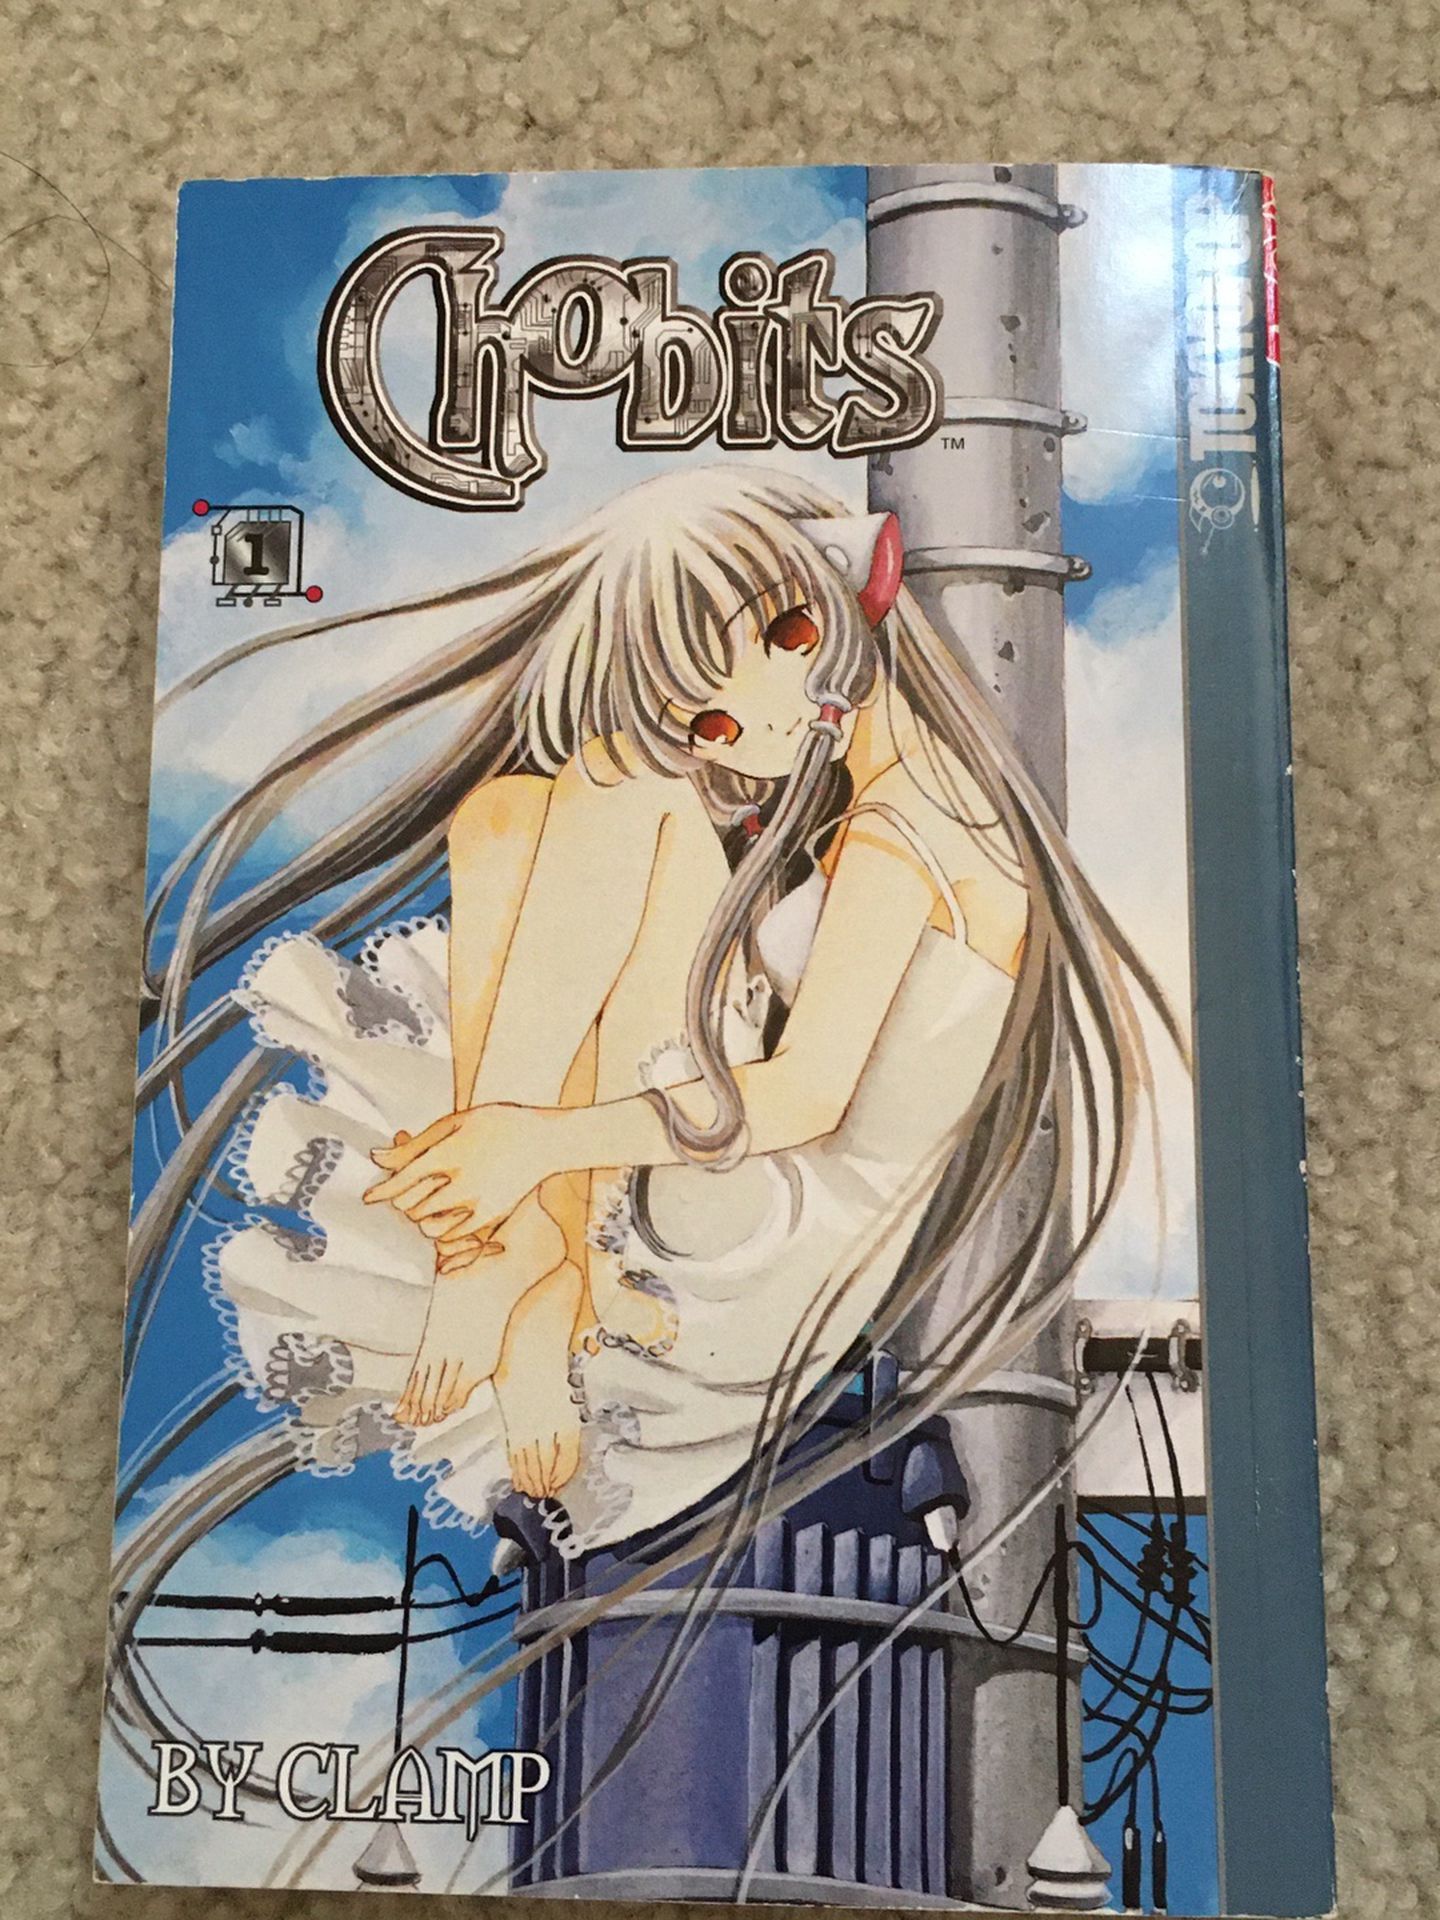 Manga Book Chobits Vol 1 By Clamp